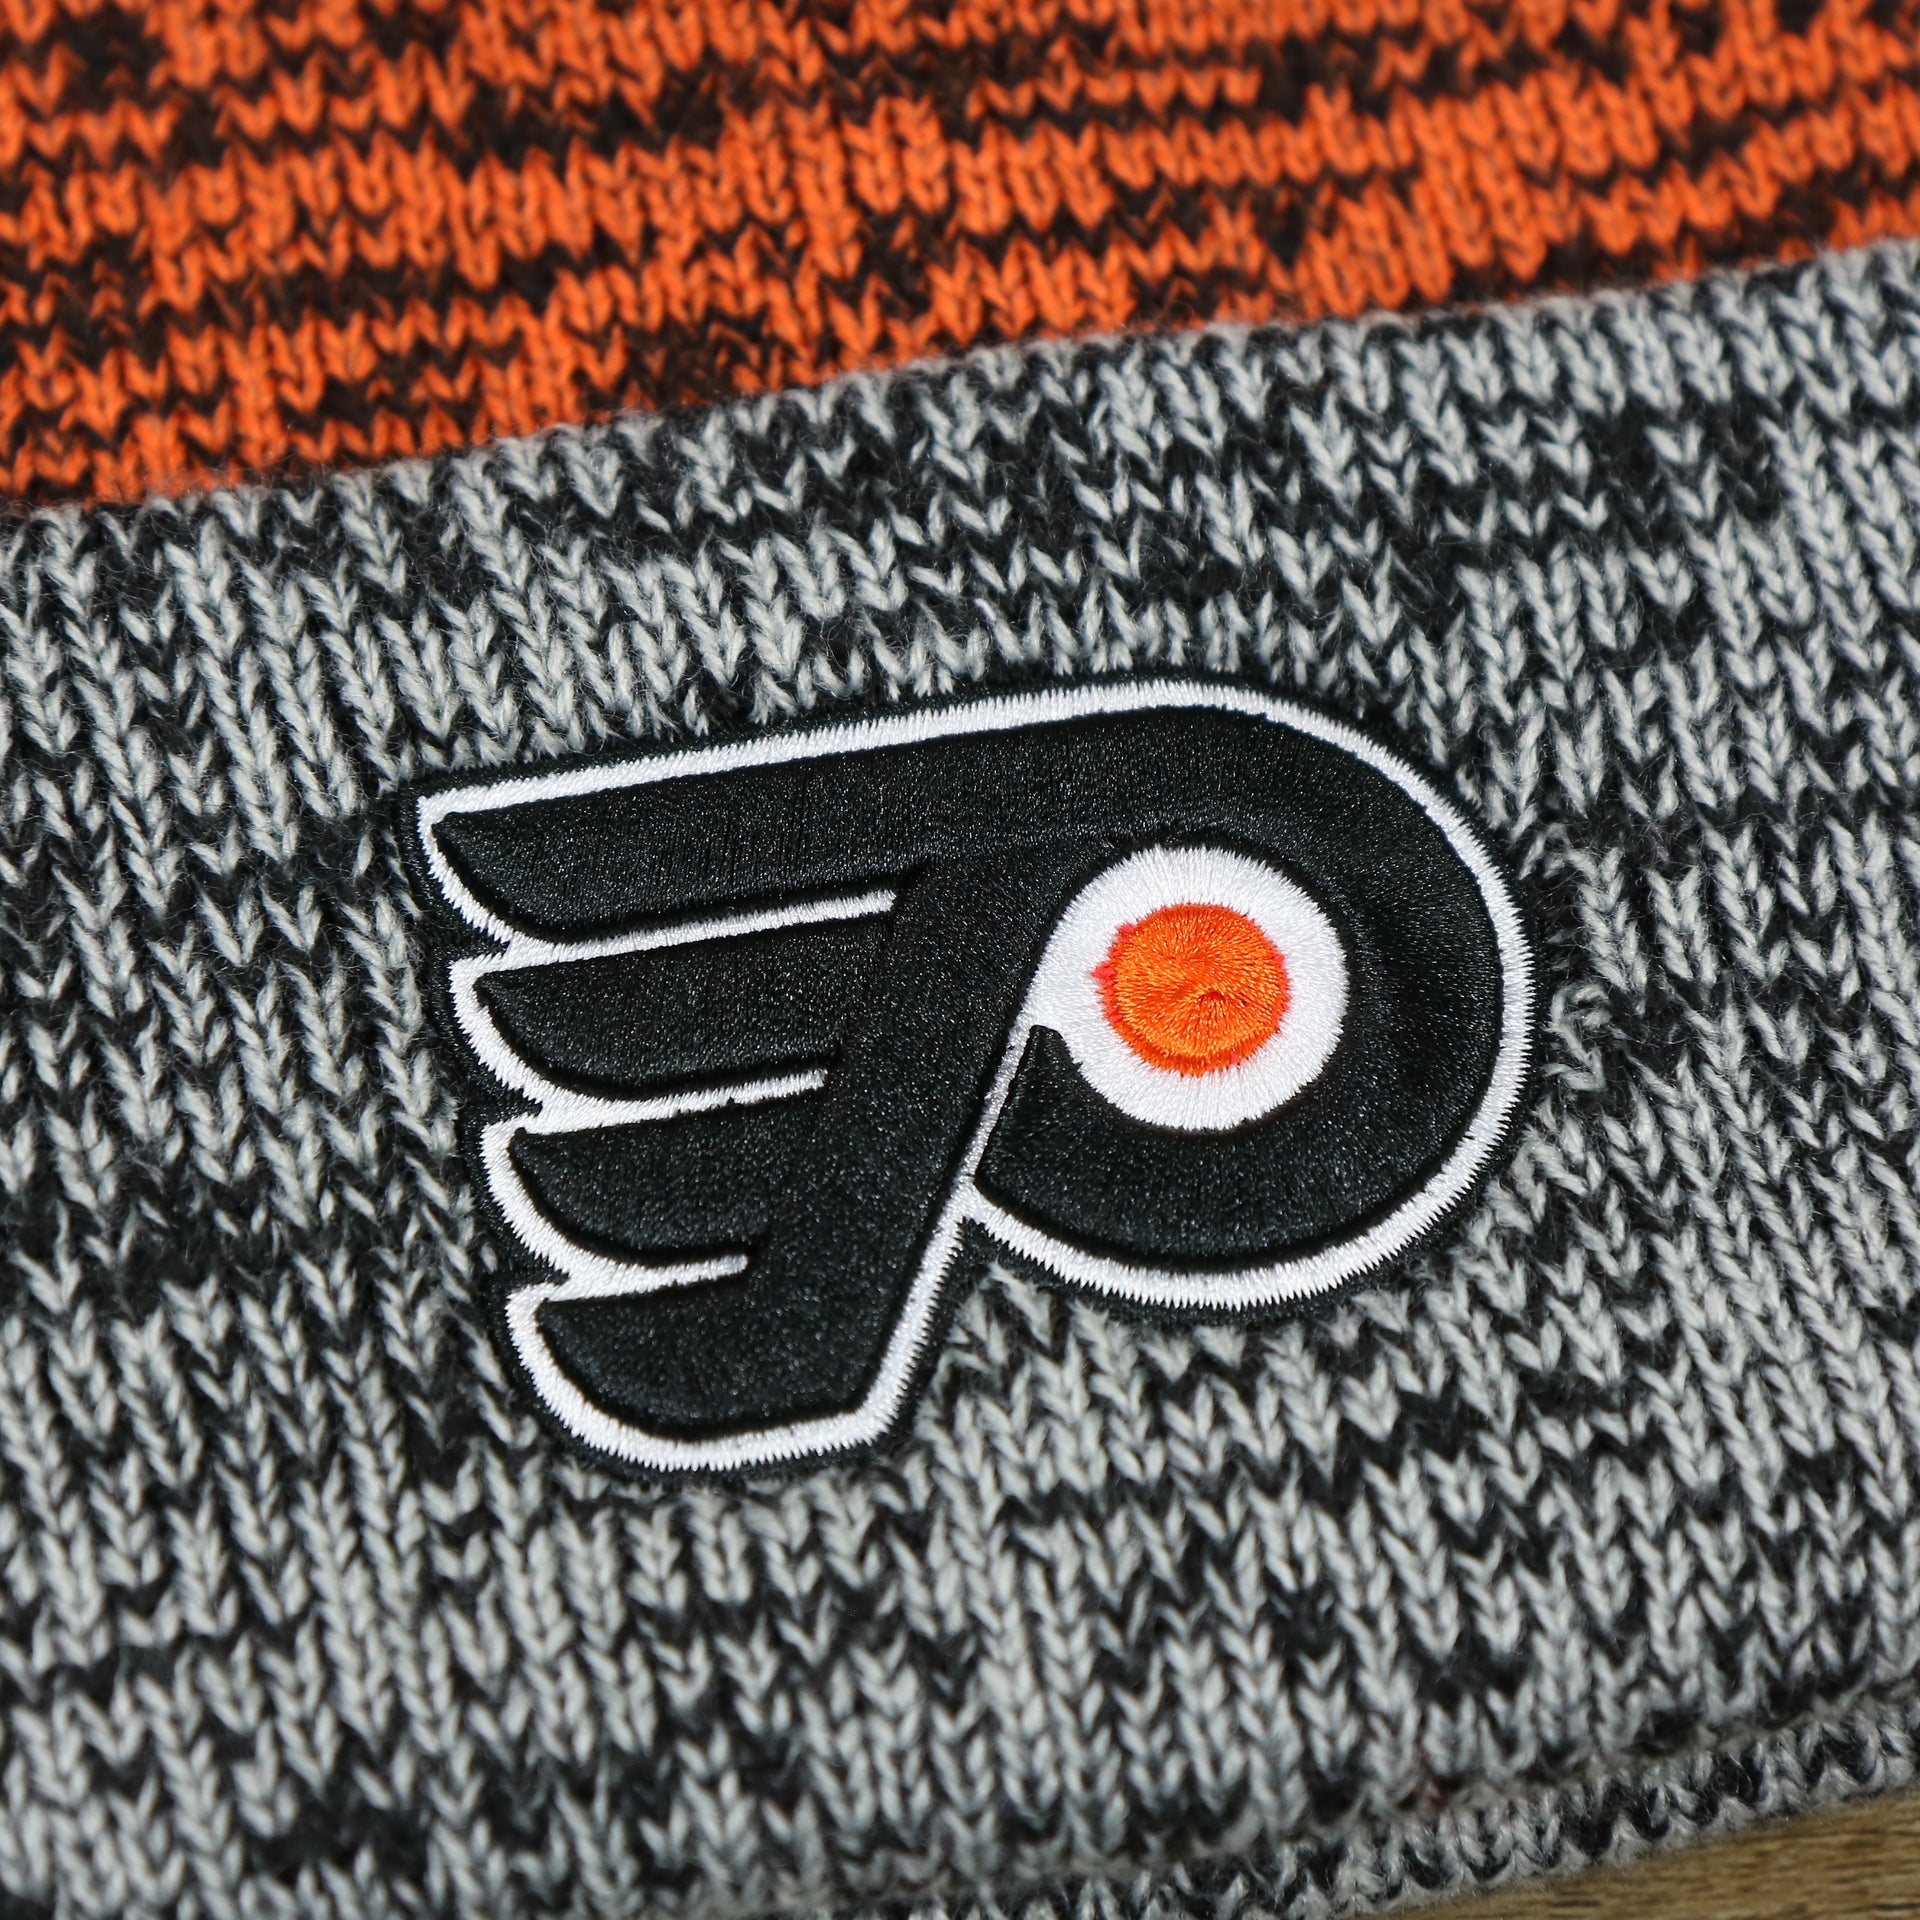 The Flyers Logo on the Philadelphia Flyers Static Knit Cuffed Winter Beanie With Pom Pom | Black, Orange, And Gray Beanie